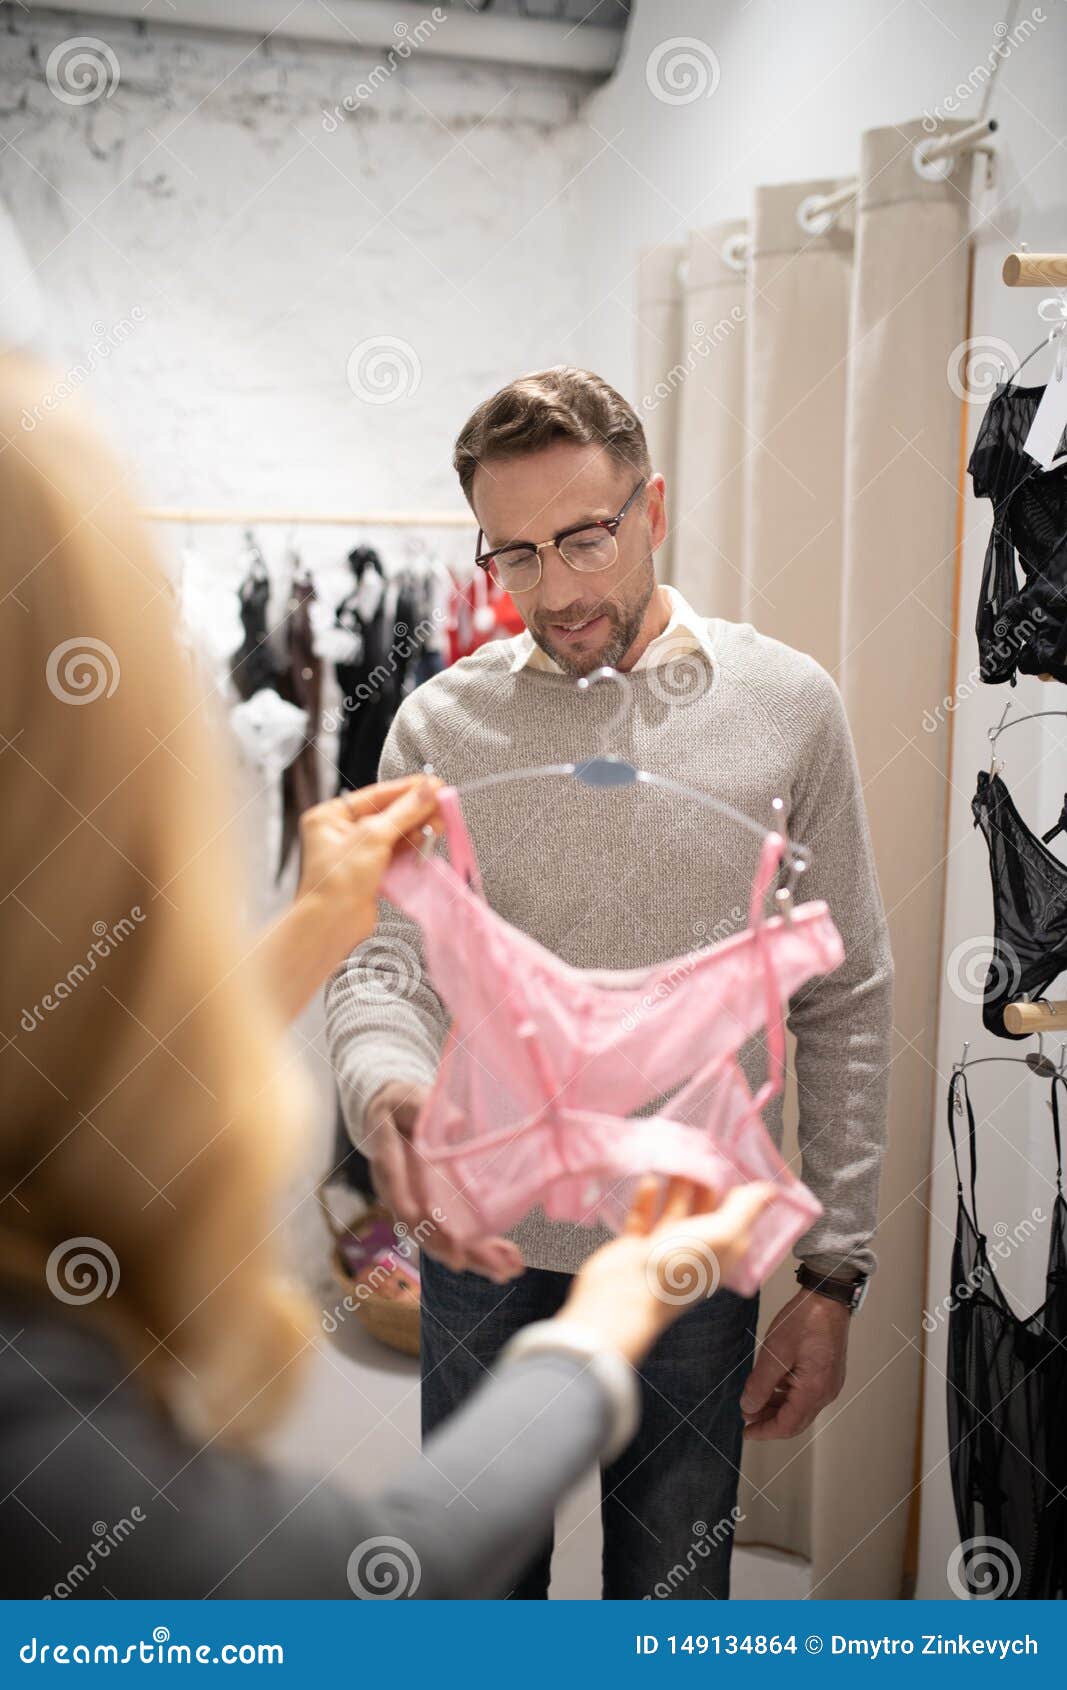 husband wearing wifes underwear